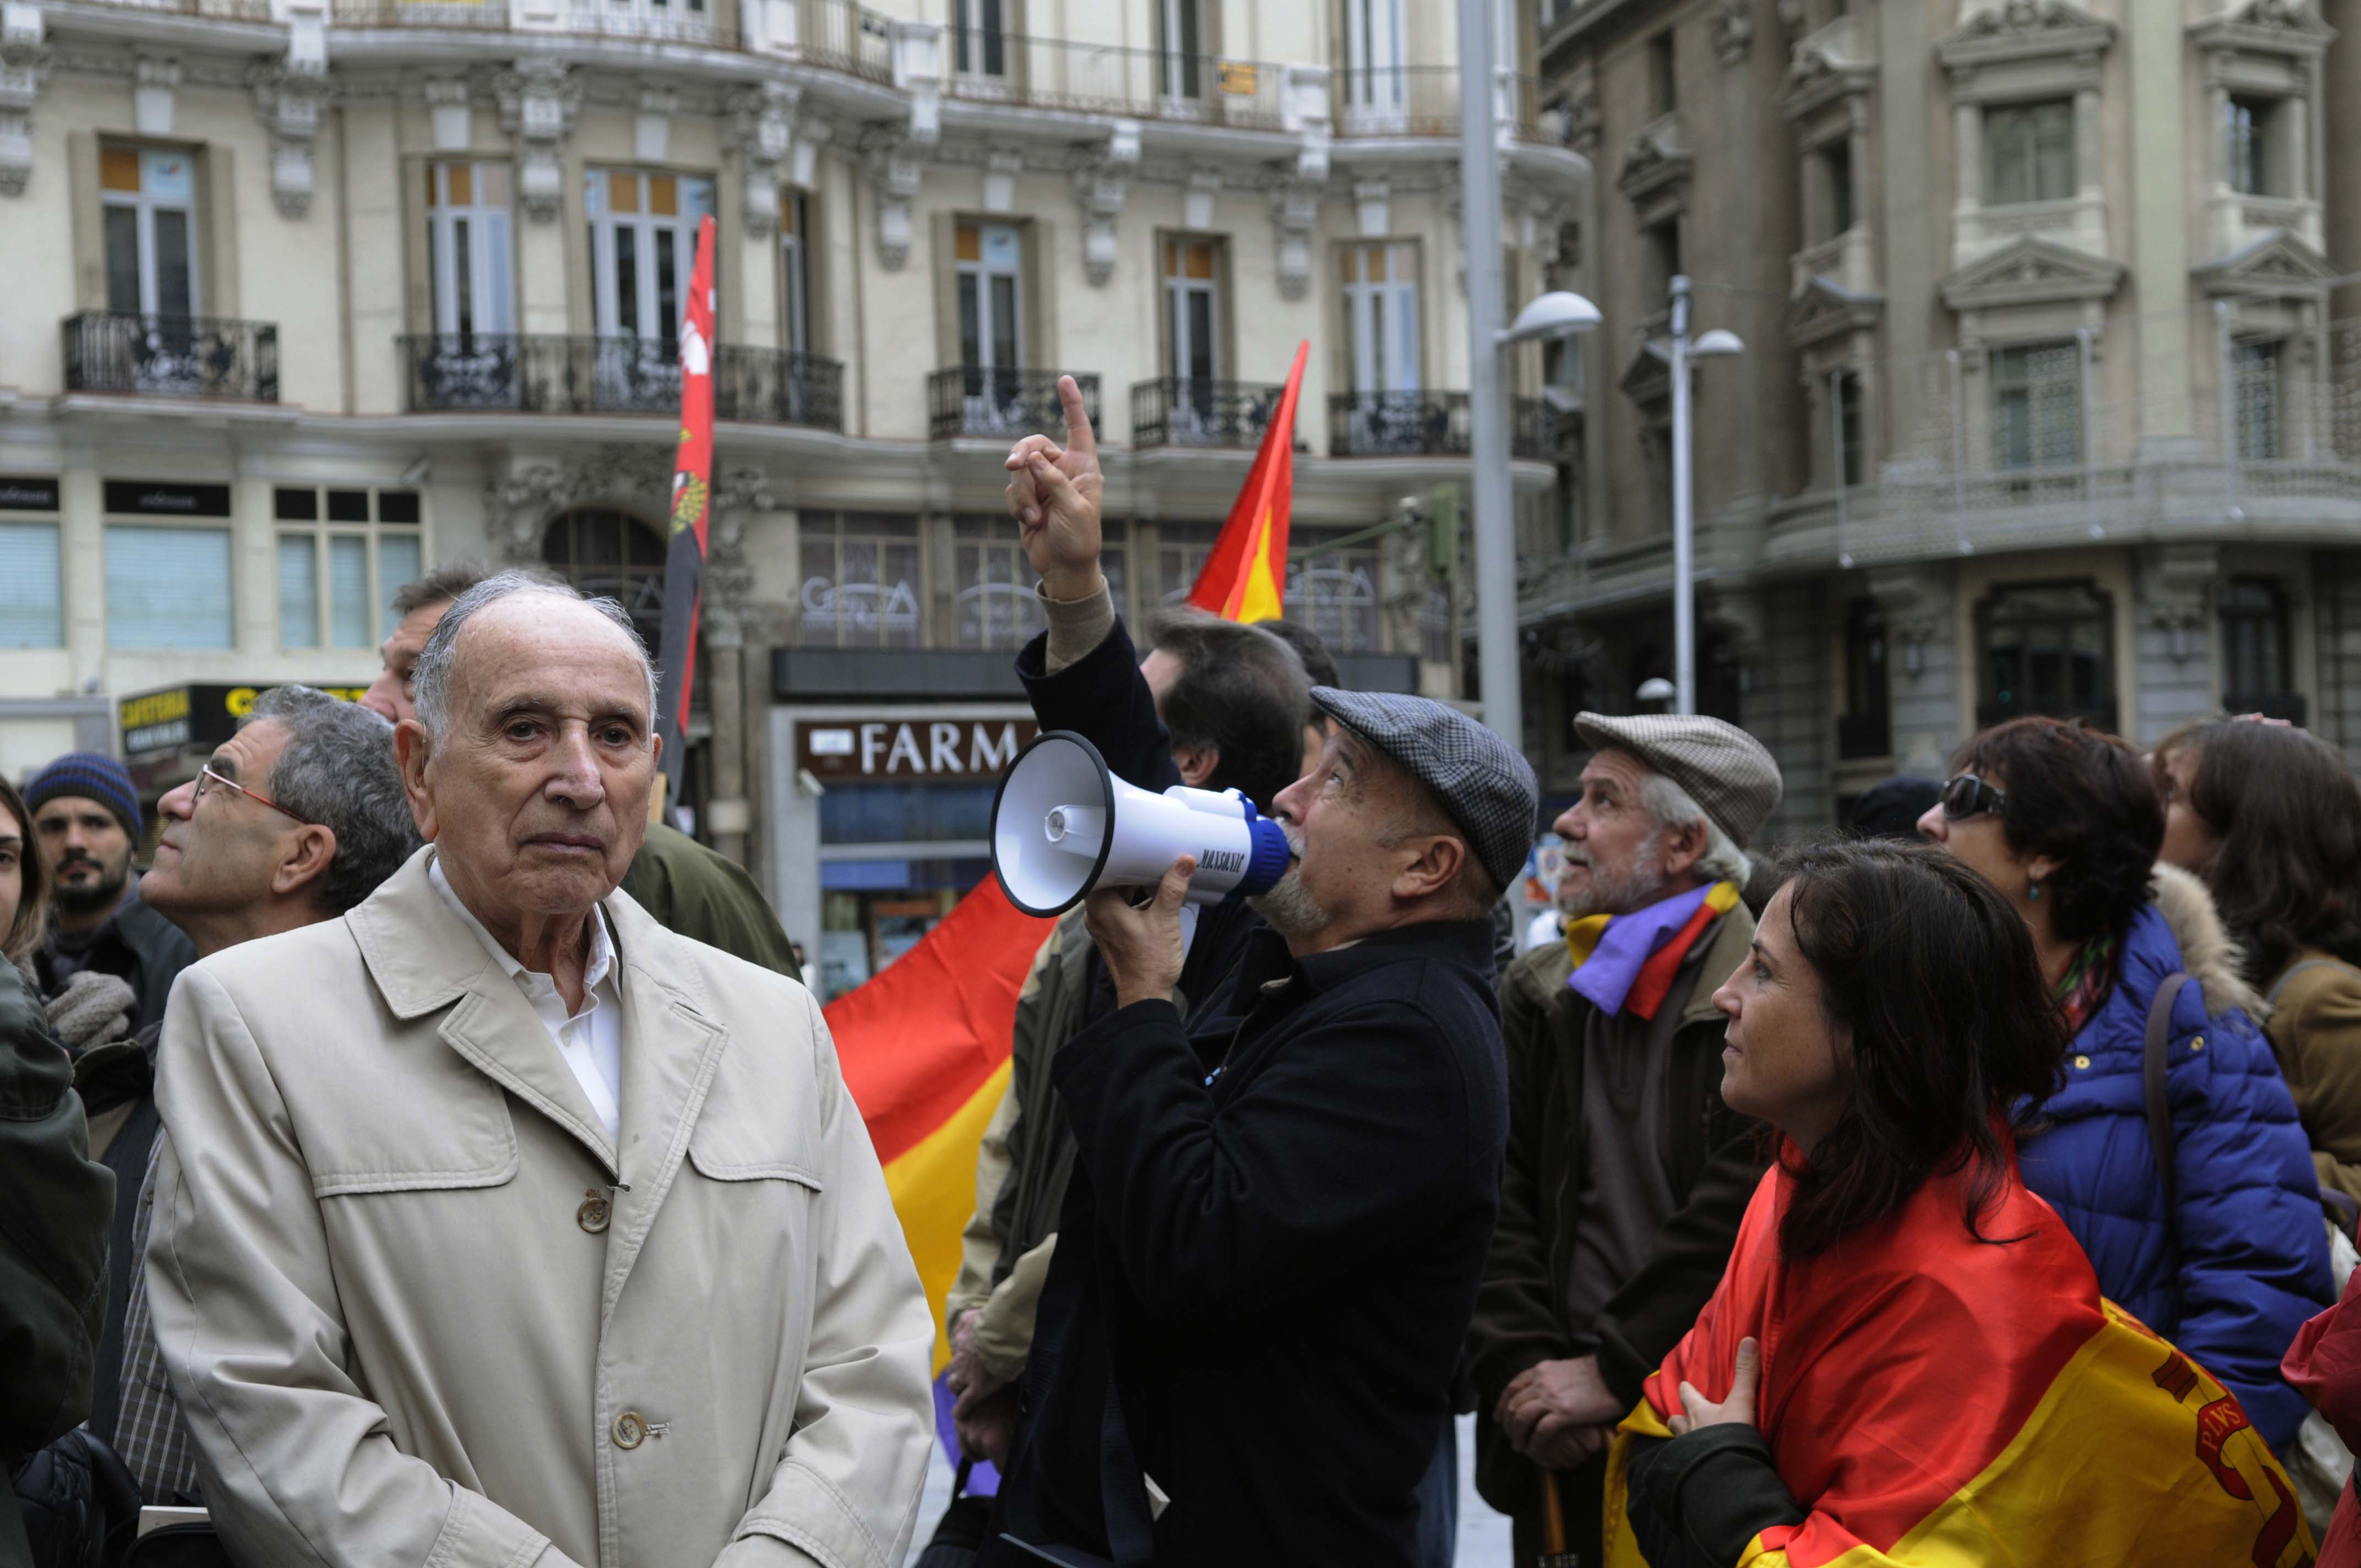 Madrid commemorates the International Brigades - The Volunteer